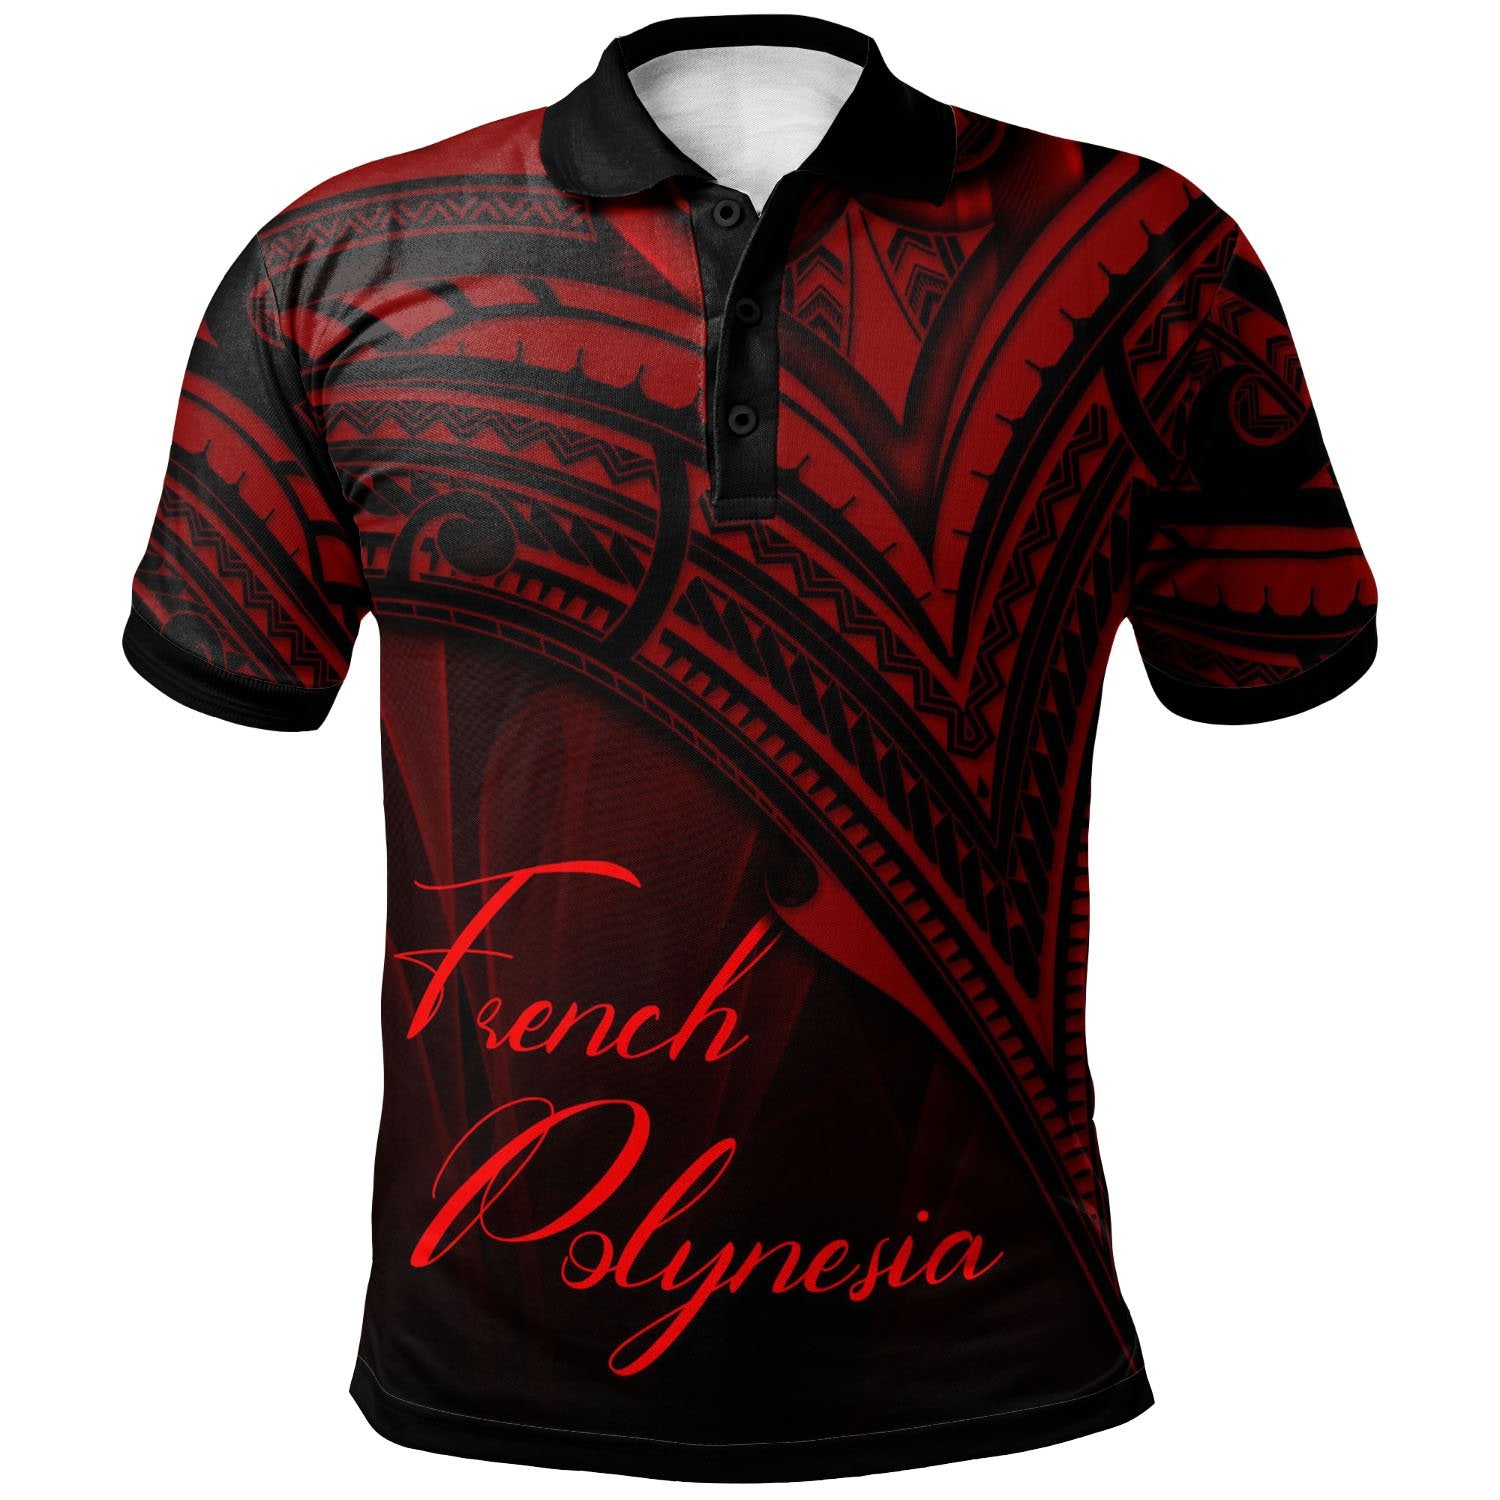 French Polynesia Polo Shirt Red Color Cross Style Unisex Black - Polynesian Pride